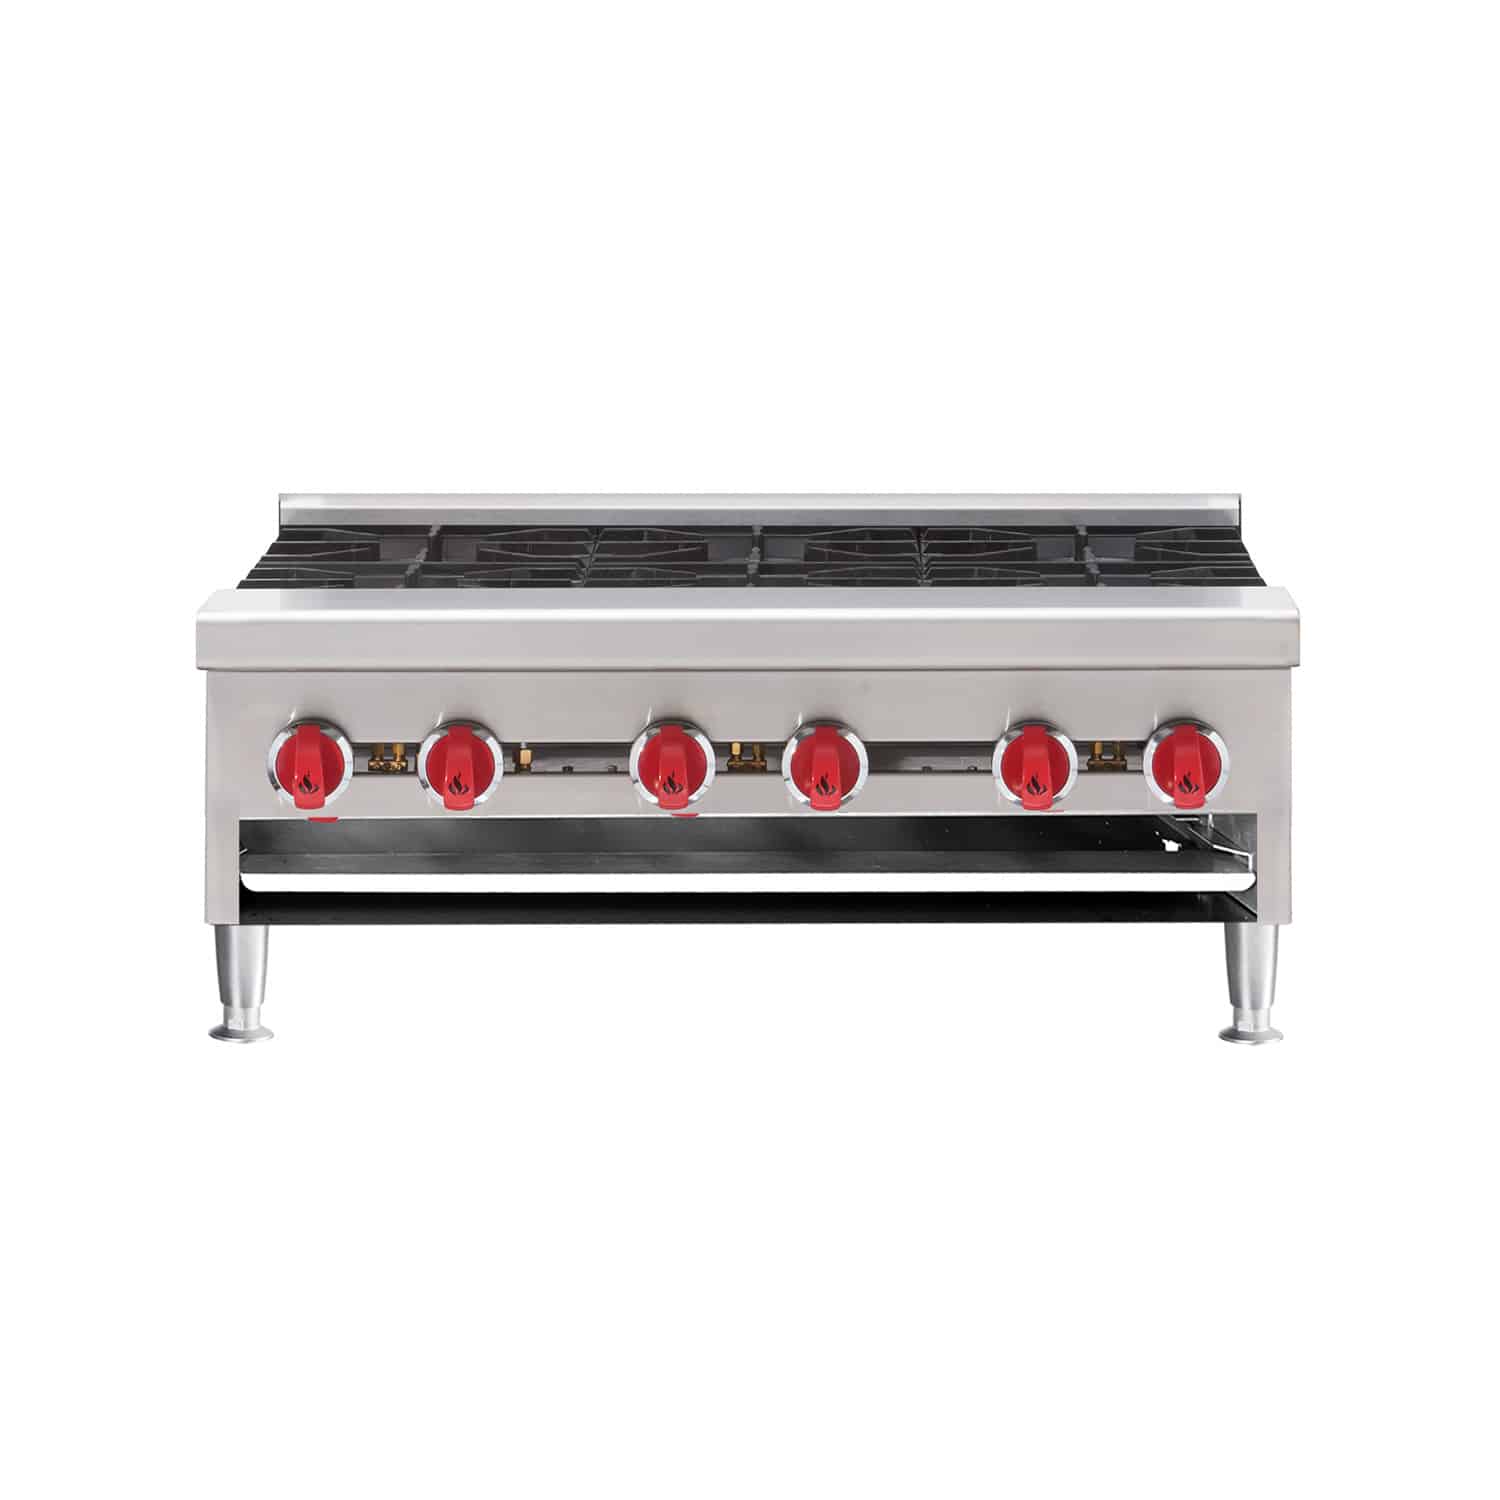 American Range ARHP-36-6 36" Gas Hotplate w/ (6) Burners & Manual Controls, Natural Gas